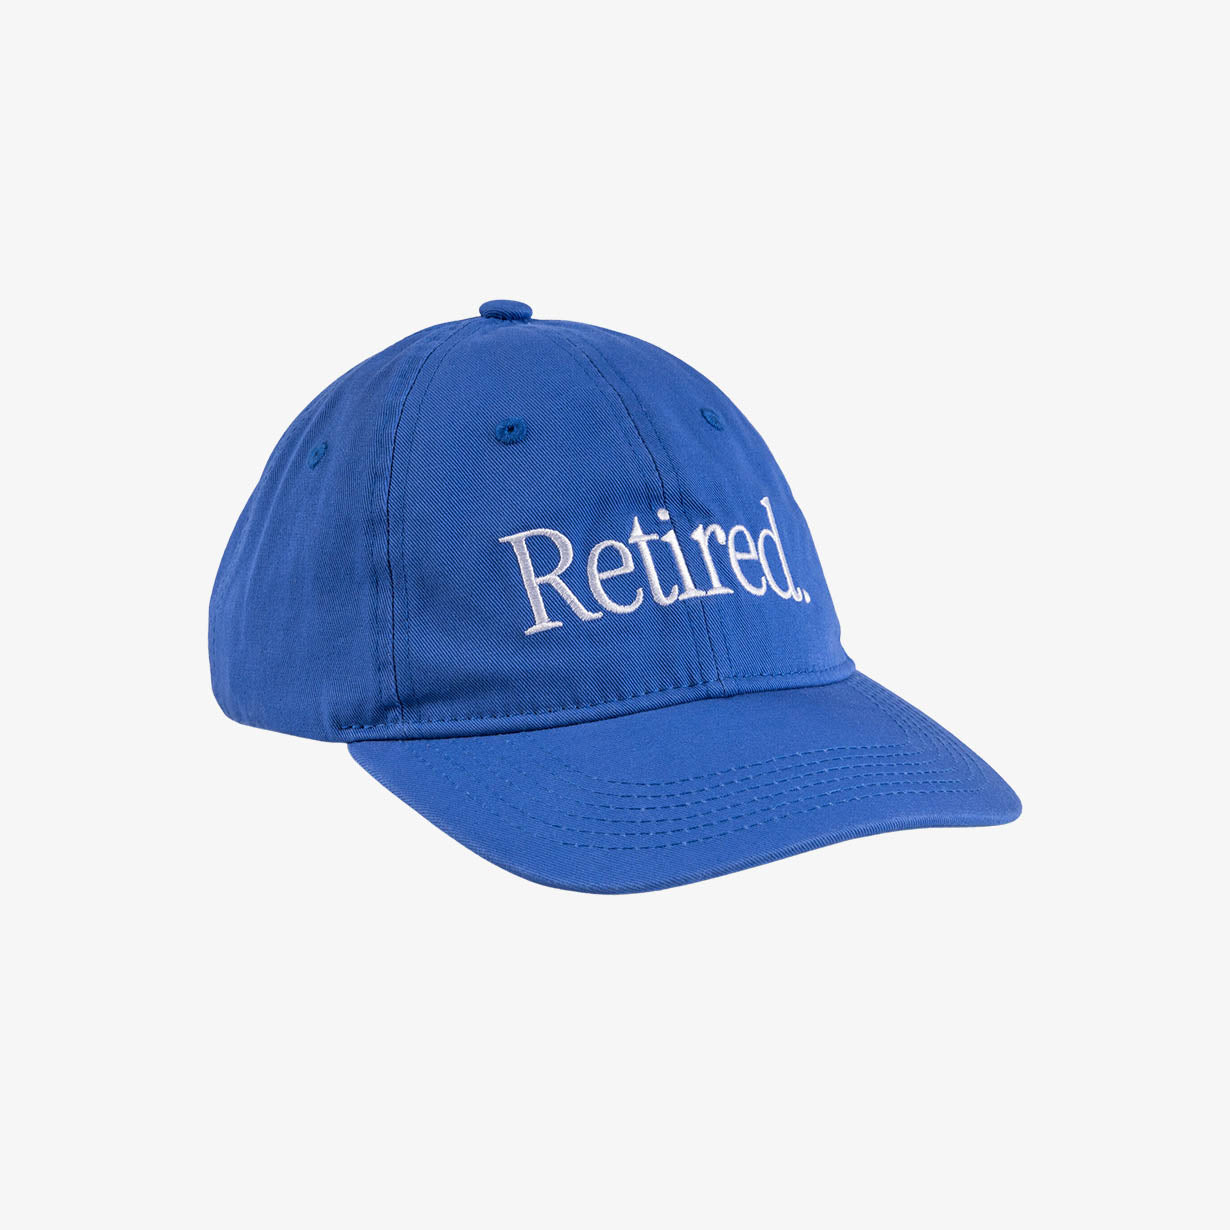 Retired Hat - Blue